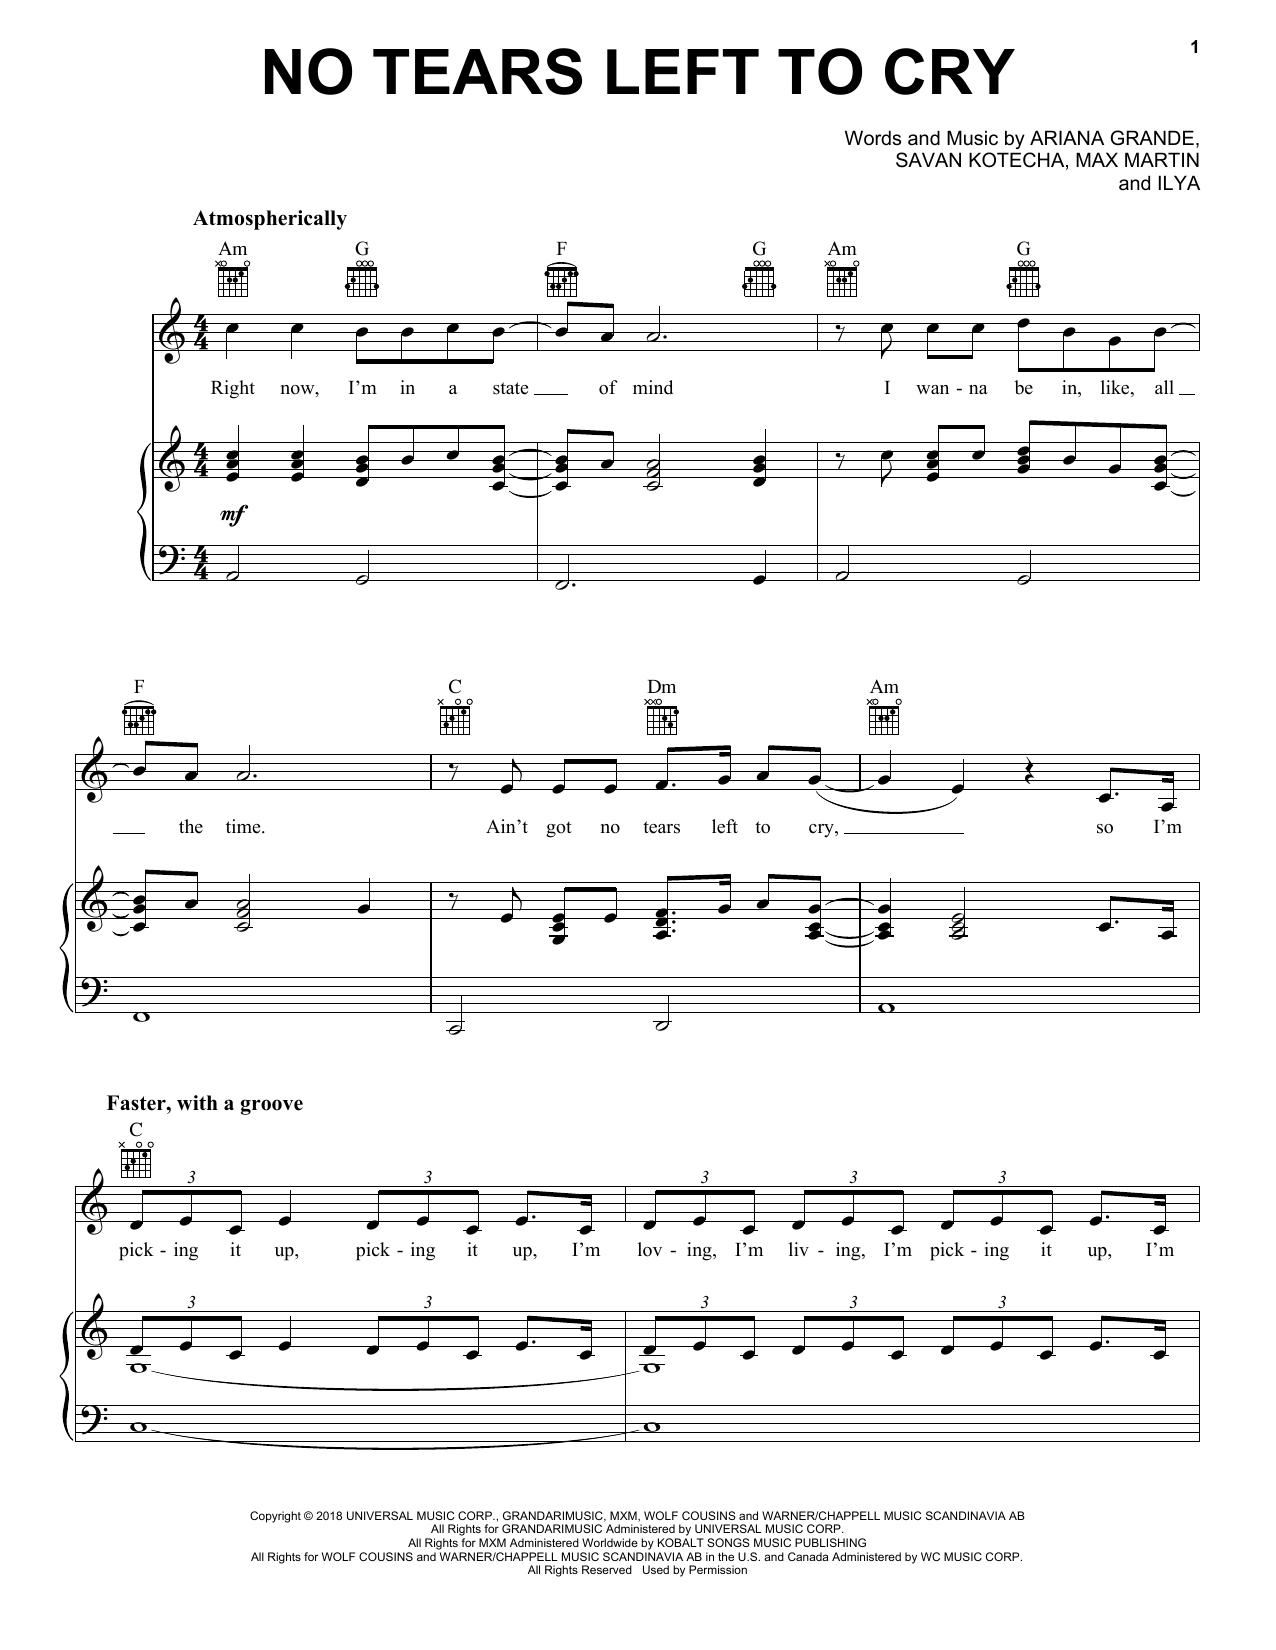 Ariana Grande "No Left To Cry" Sheet Music PDF Notes, | Pop Score Ukulele Printable. 255269